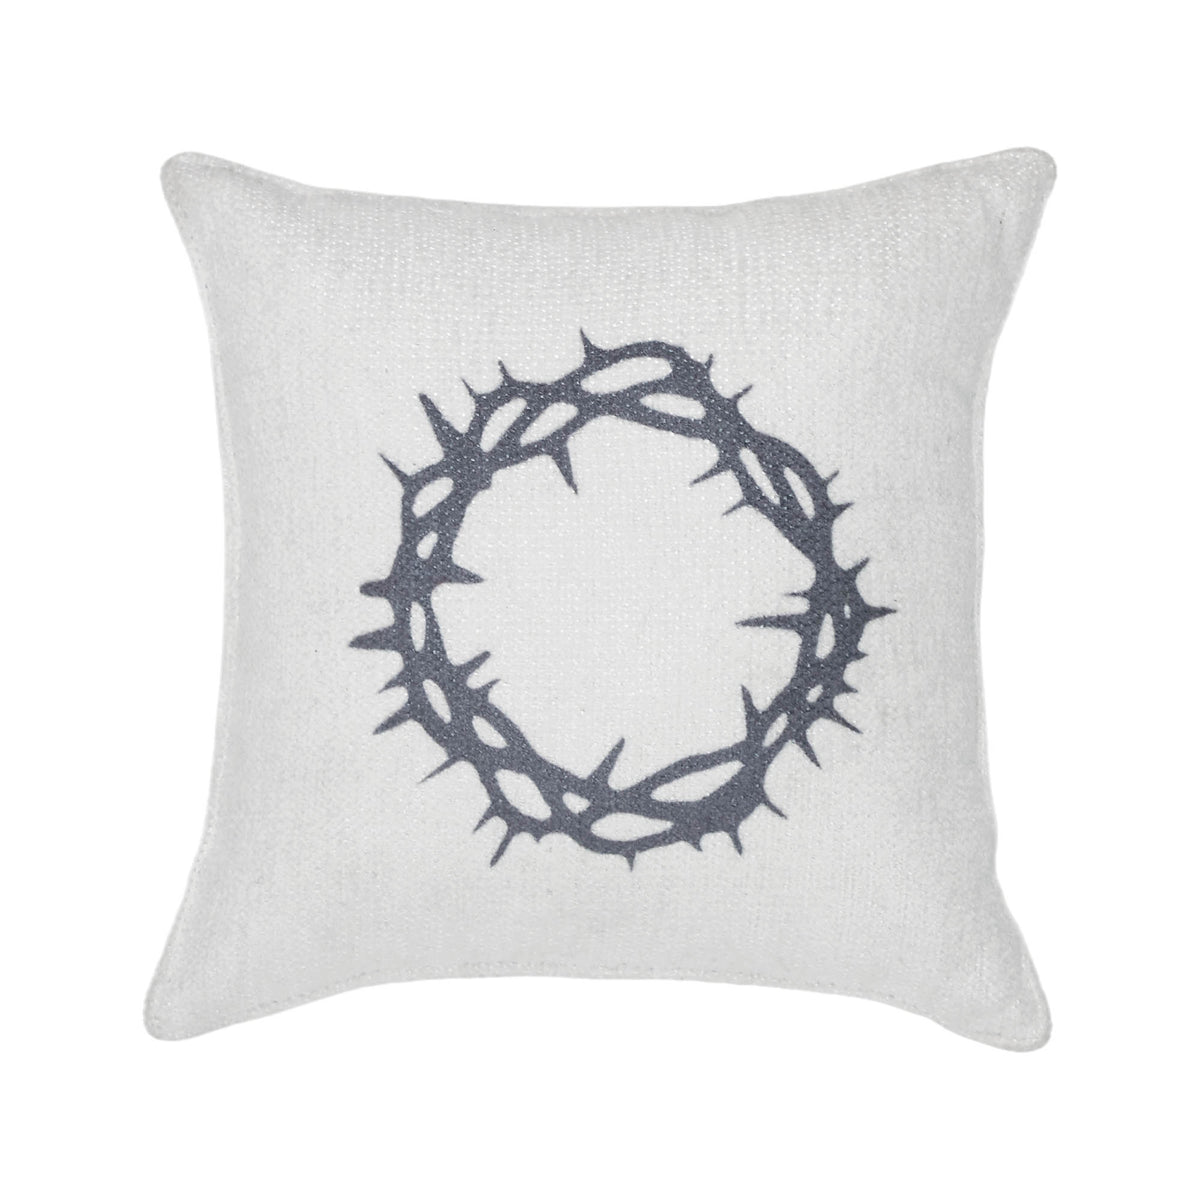 Risen Crown of Thorns Pillow 6x6